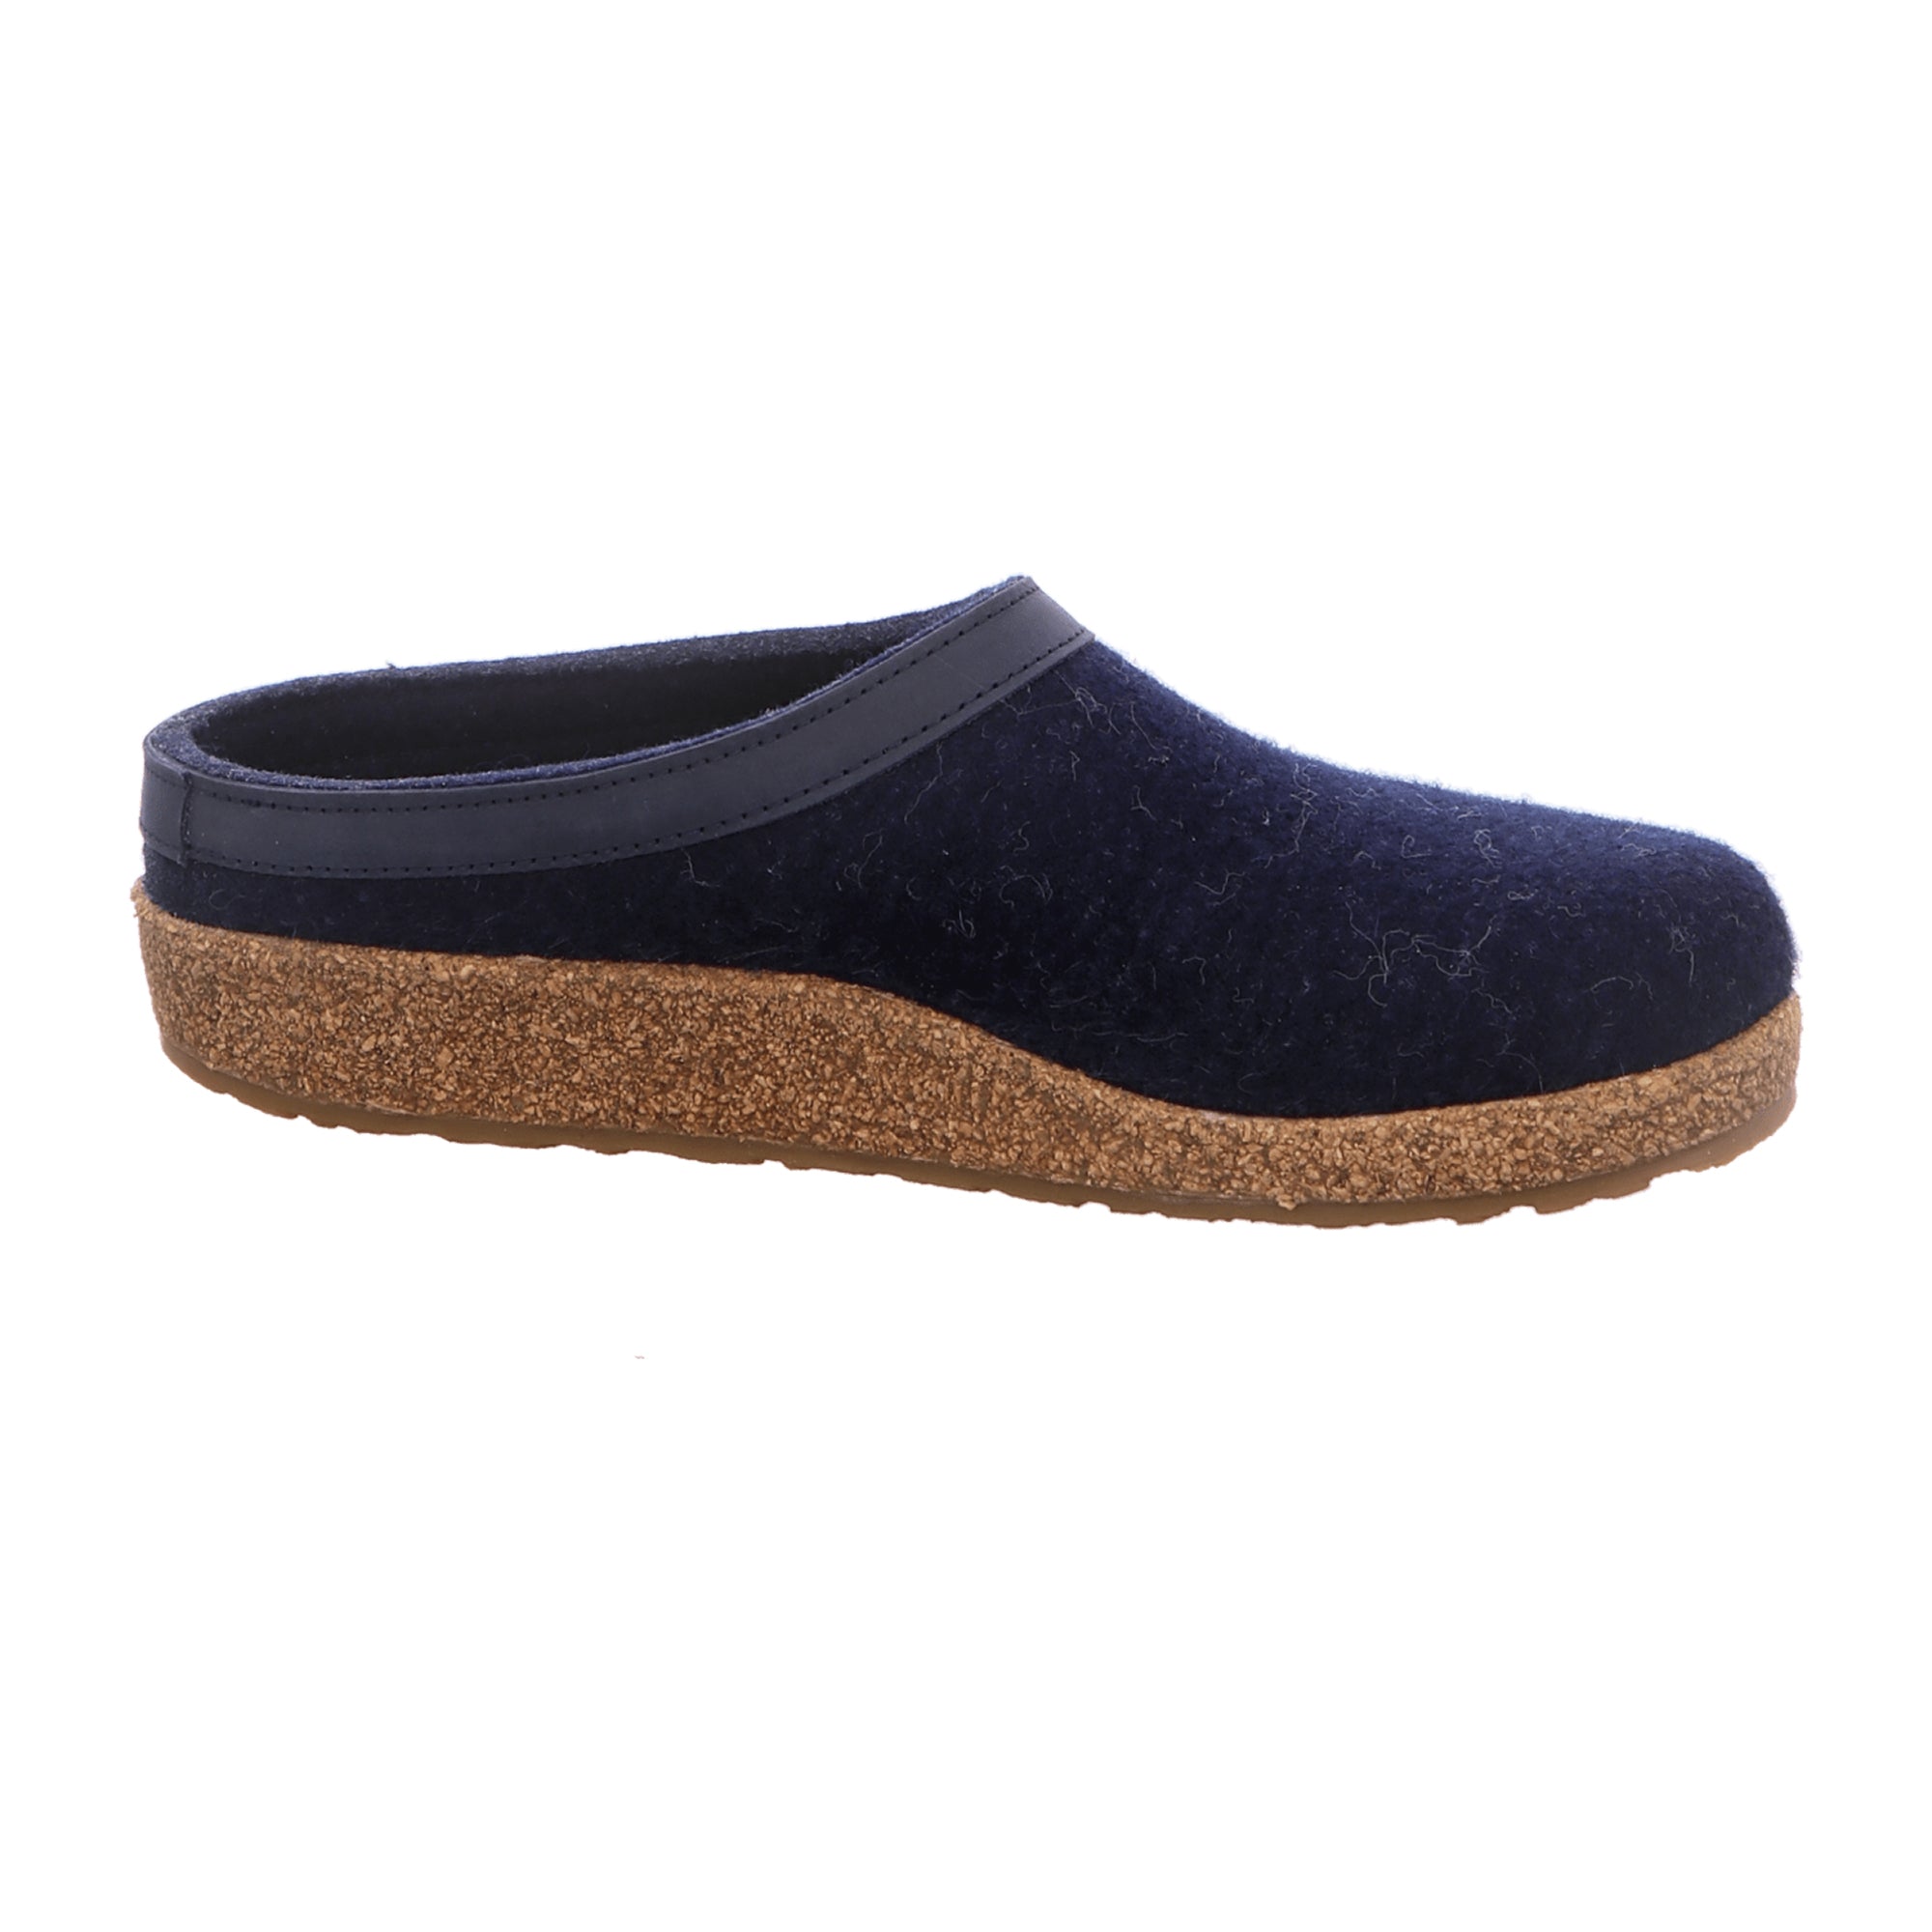 Haflinger Grizzly Torben Men's Slippers - Stylish Medium Blue Comfort Footwear